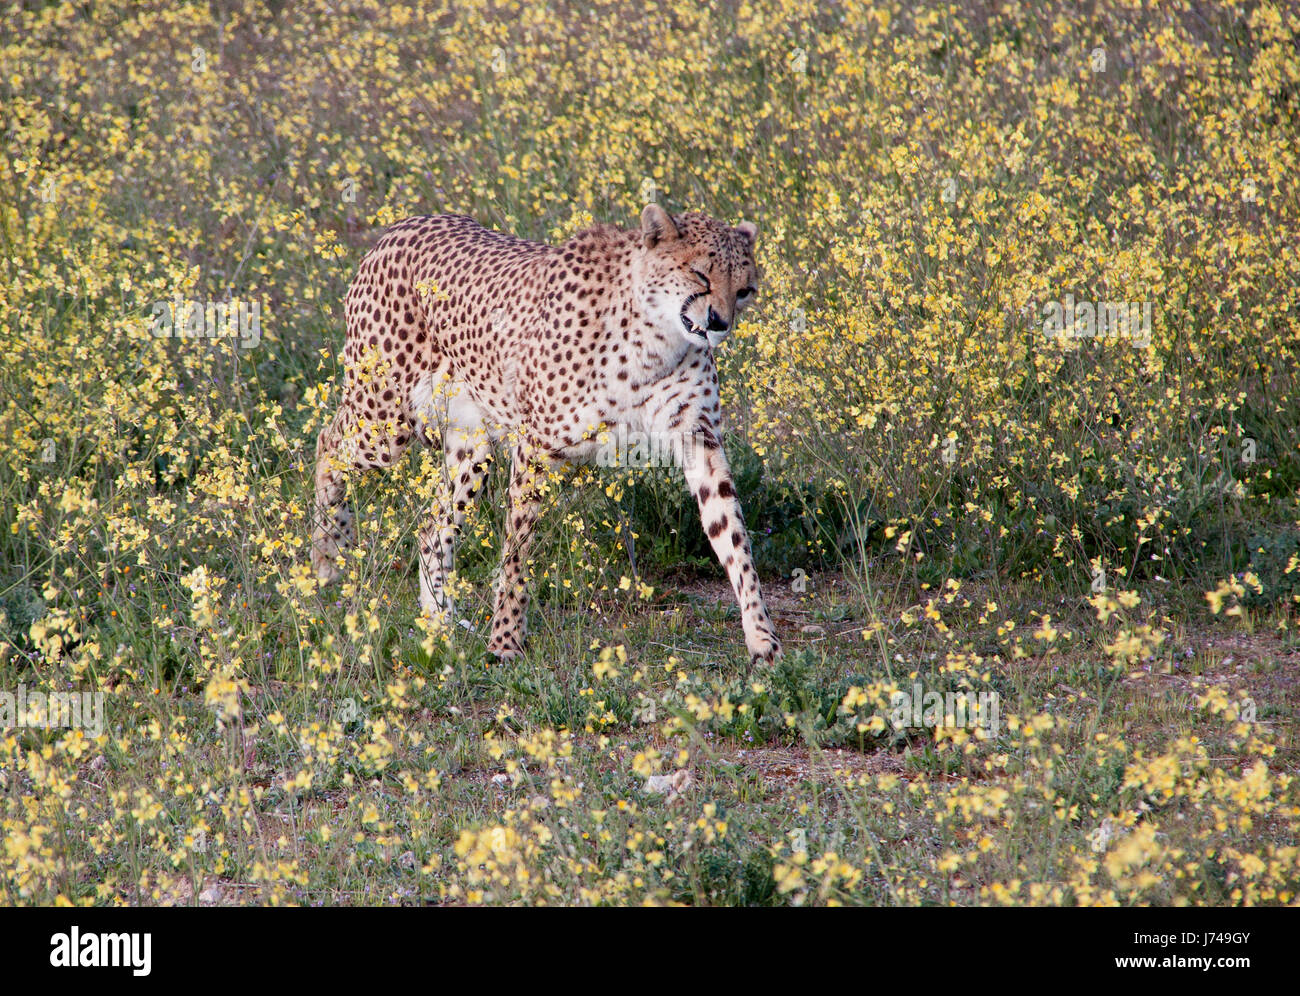 sneezing cheetah Stock Photo